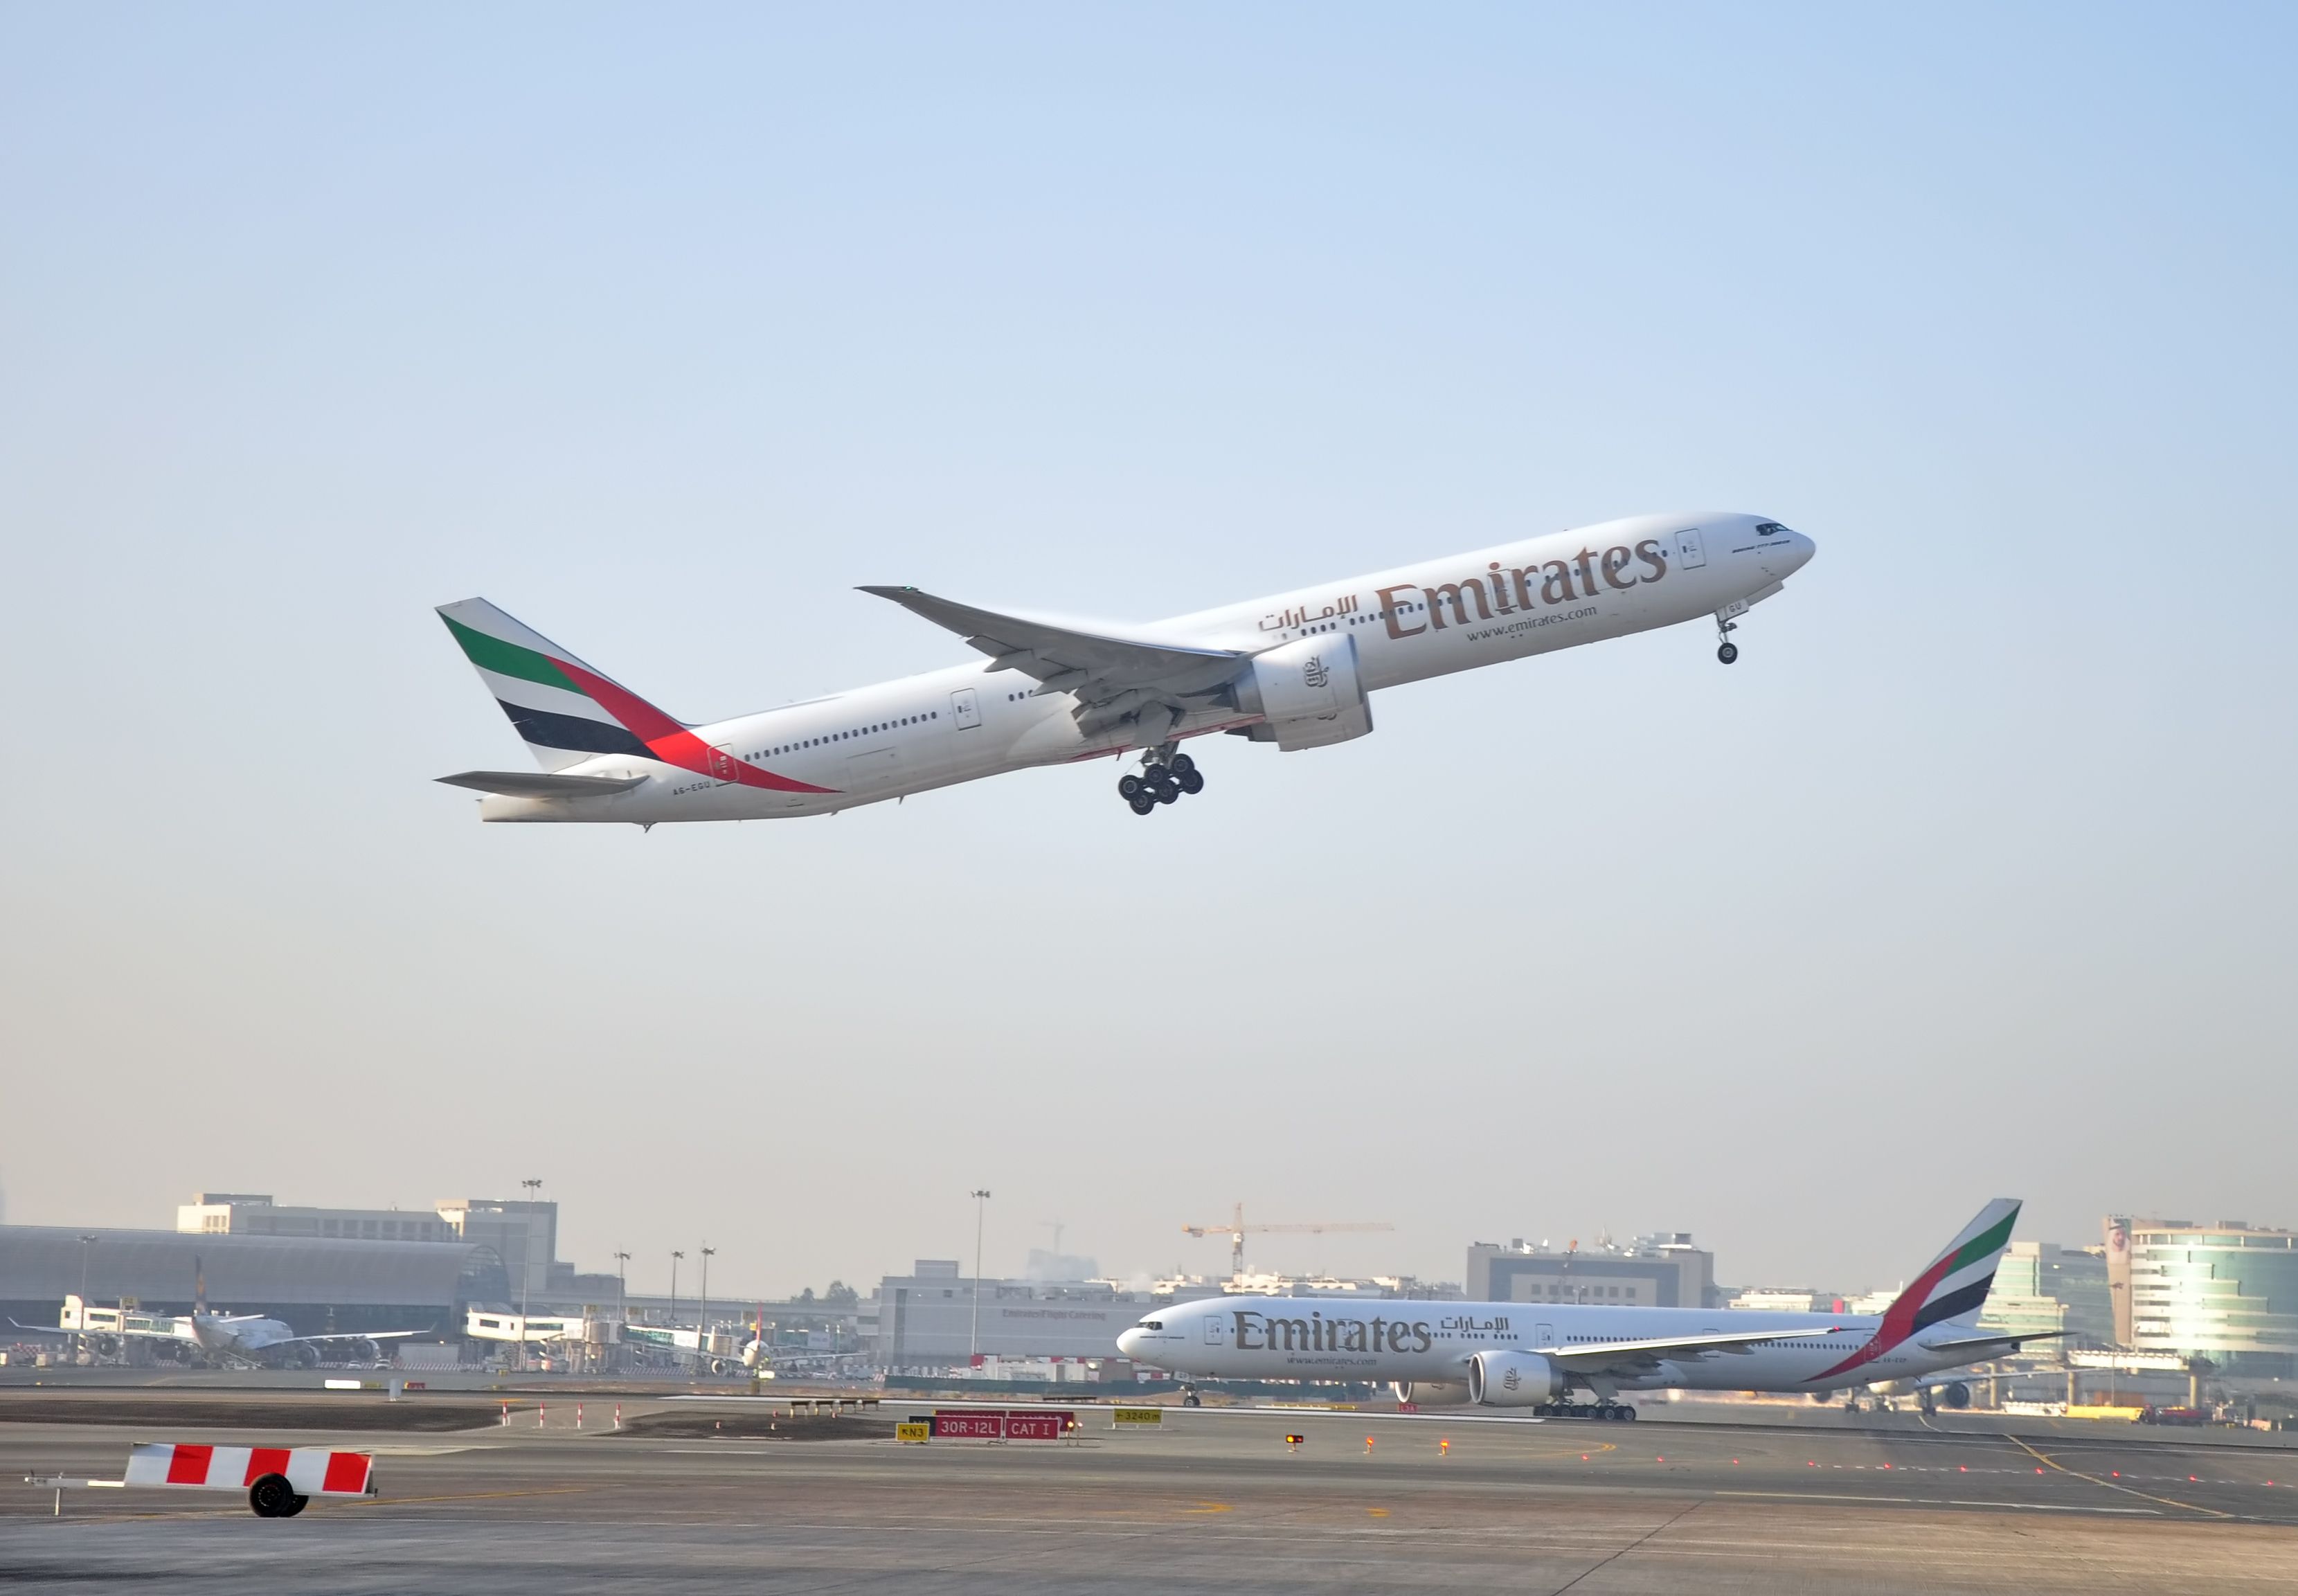 Emirates Boeing 777-300ER taking off from Dubai